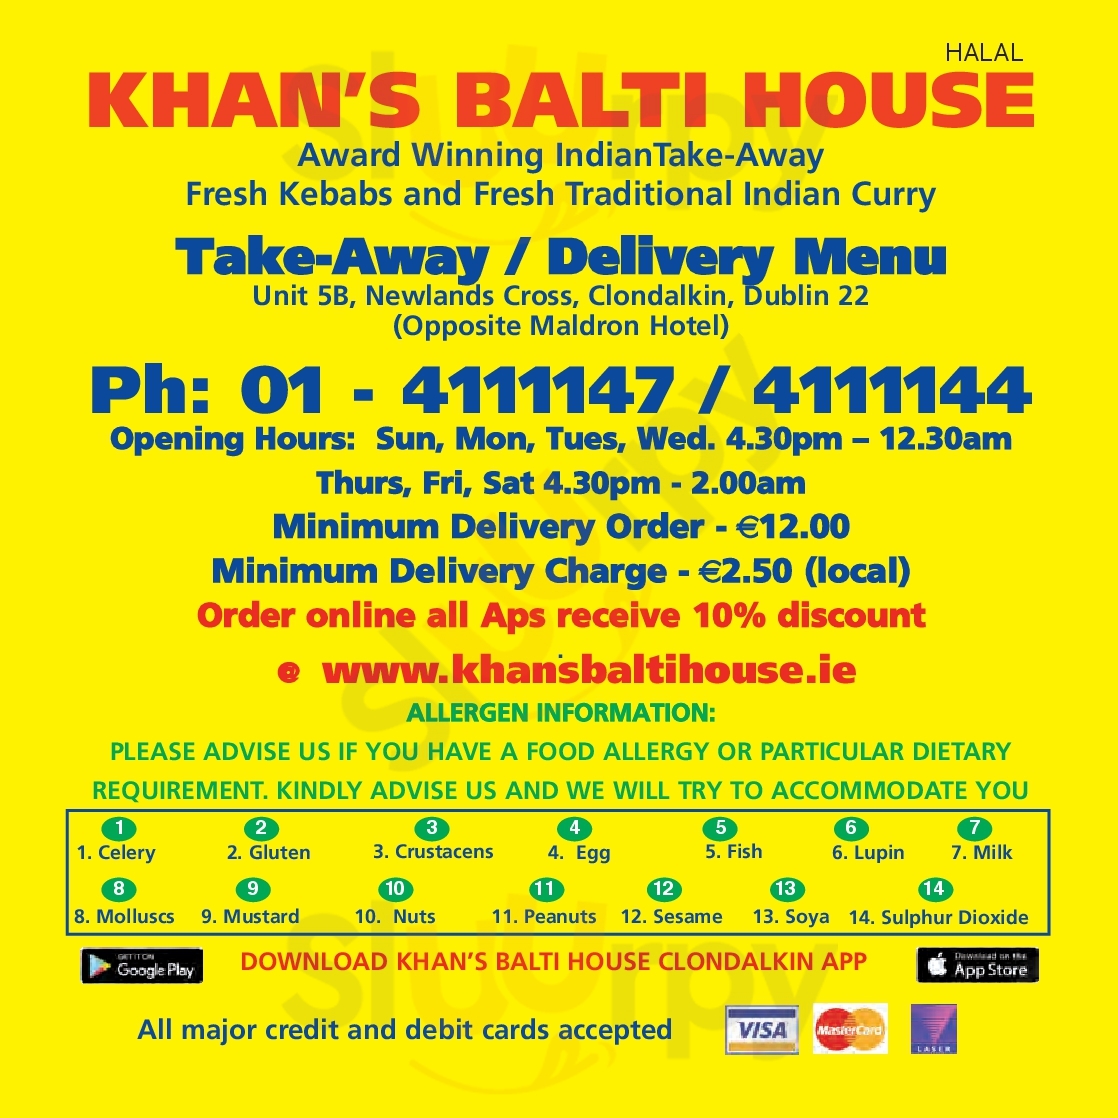 Khan’s Balti House Clondalkin Menu - 1